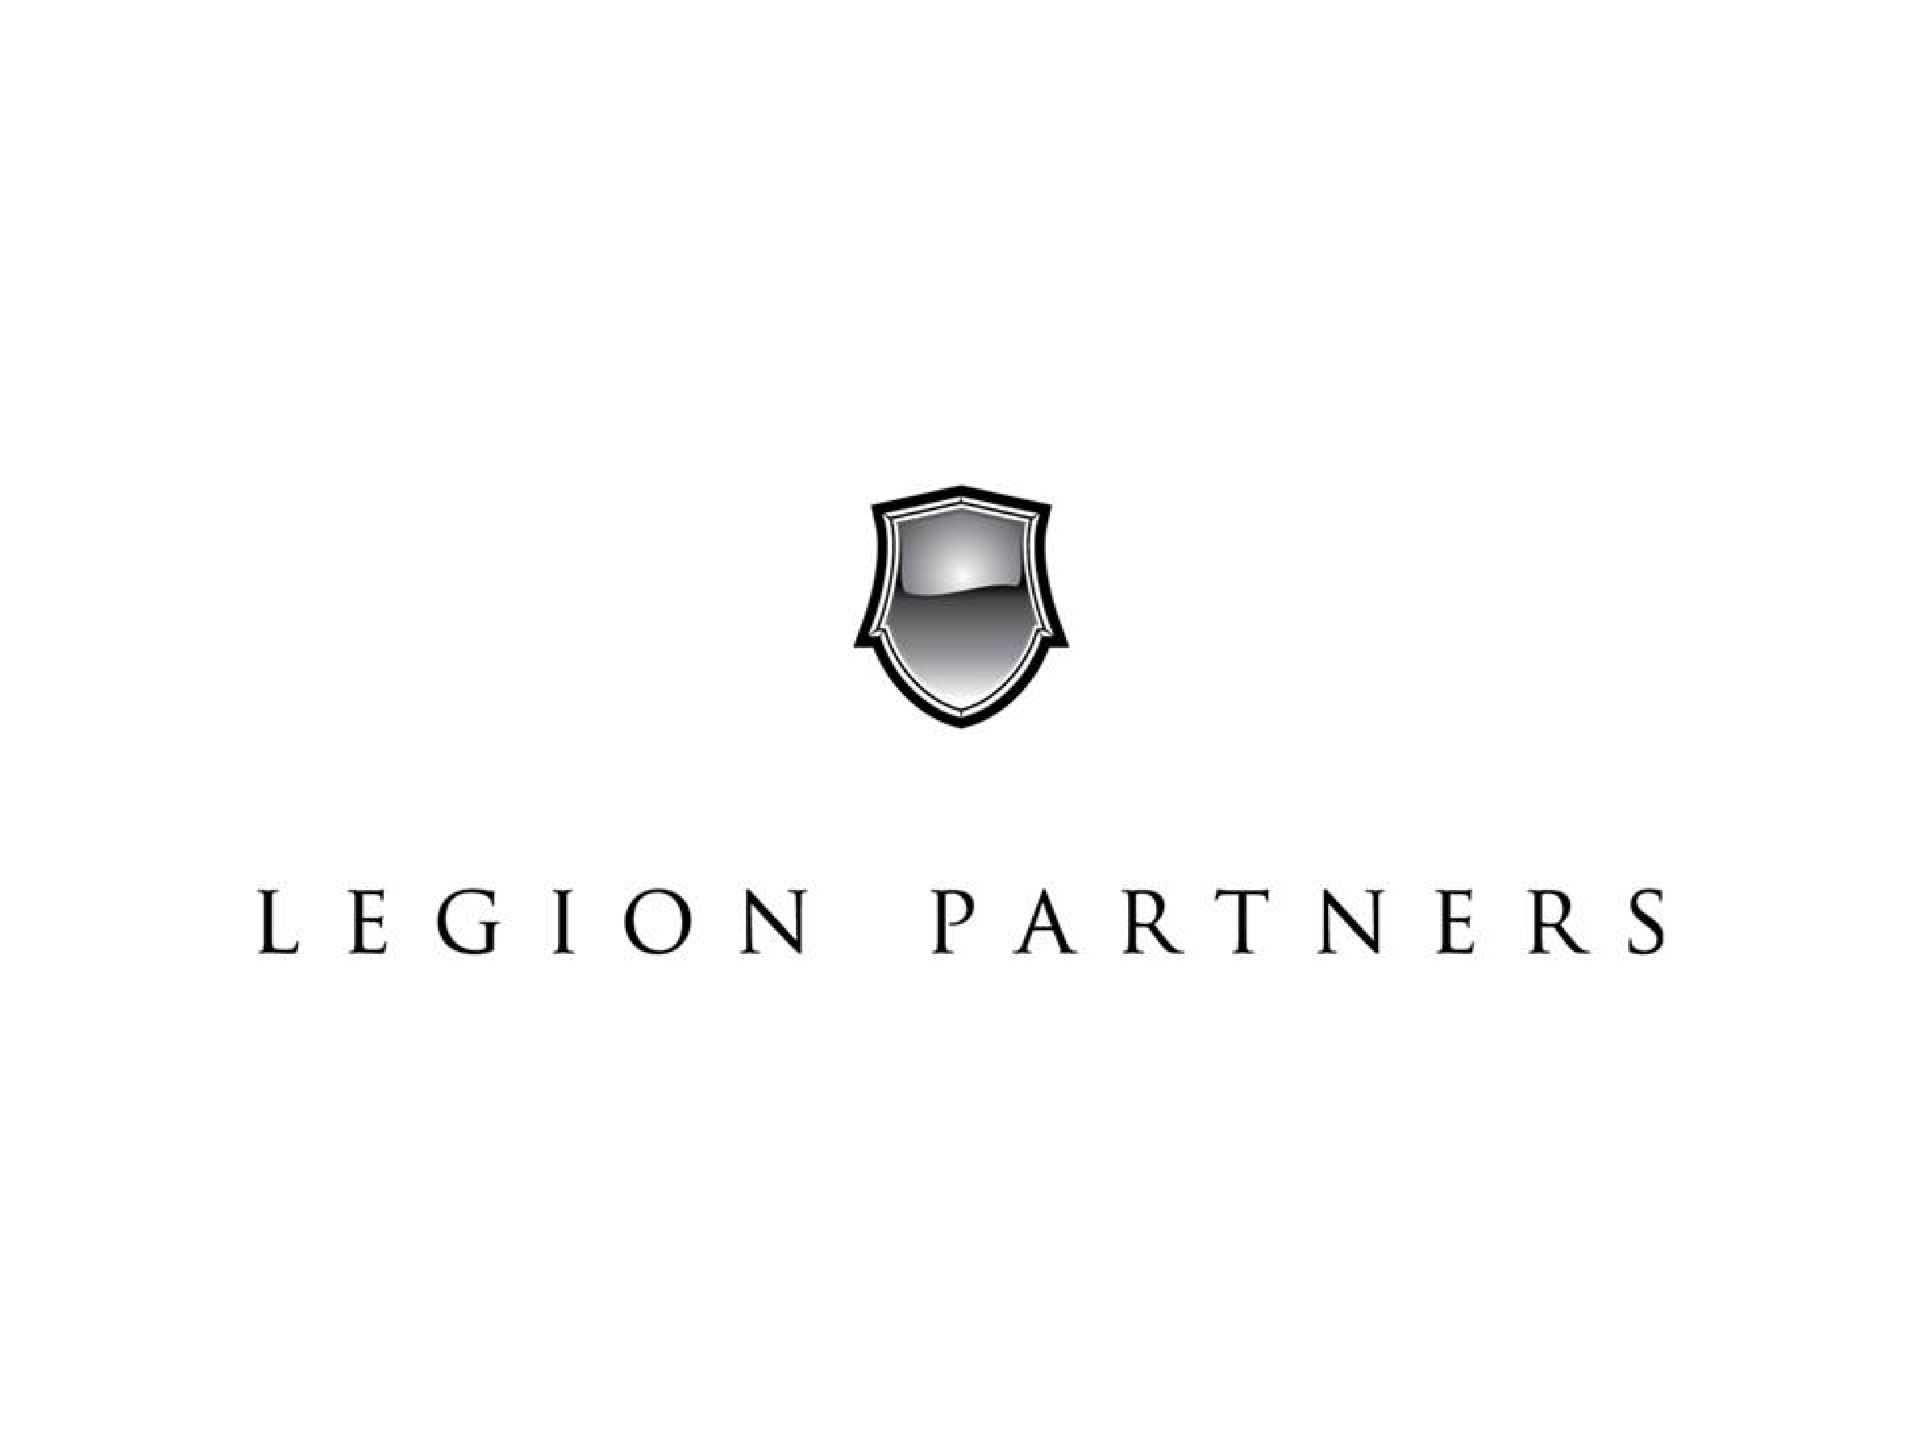 legion partners | Legion Partners